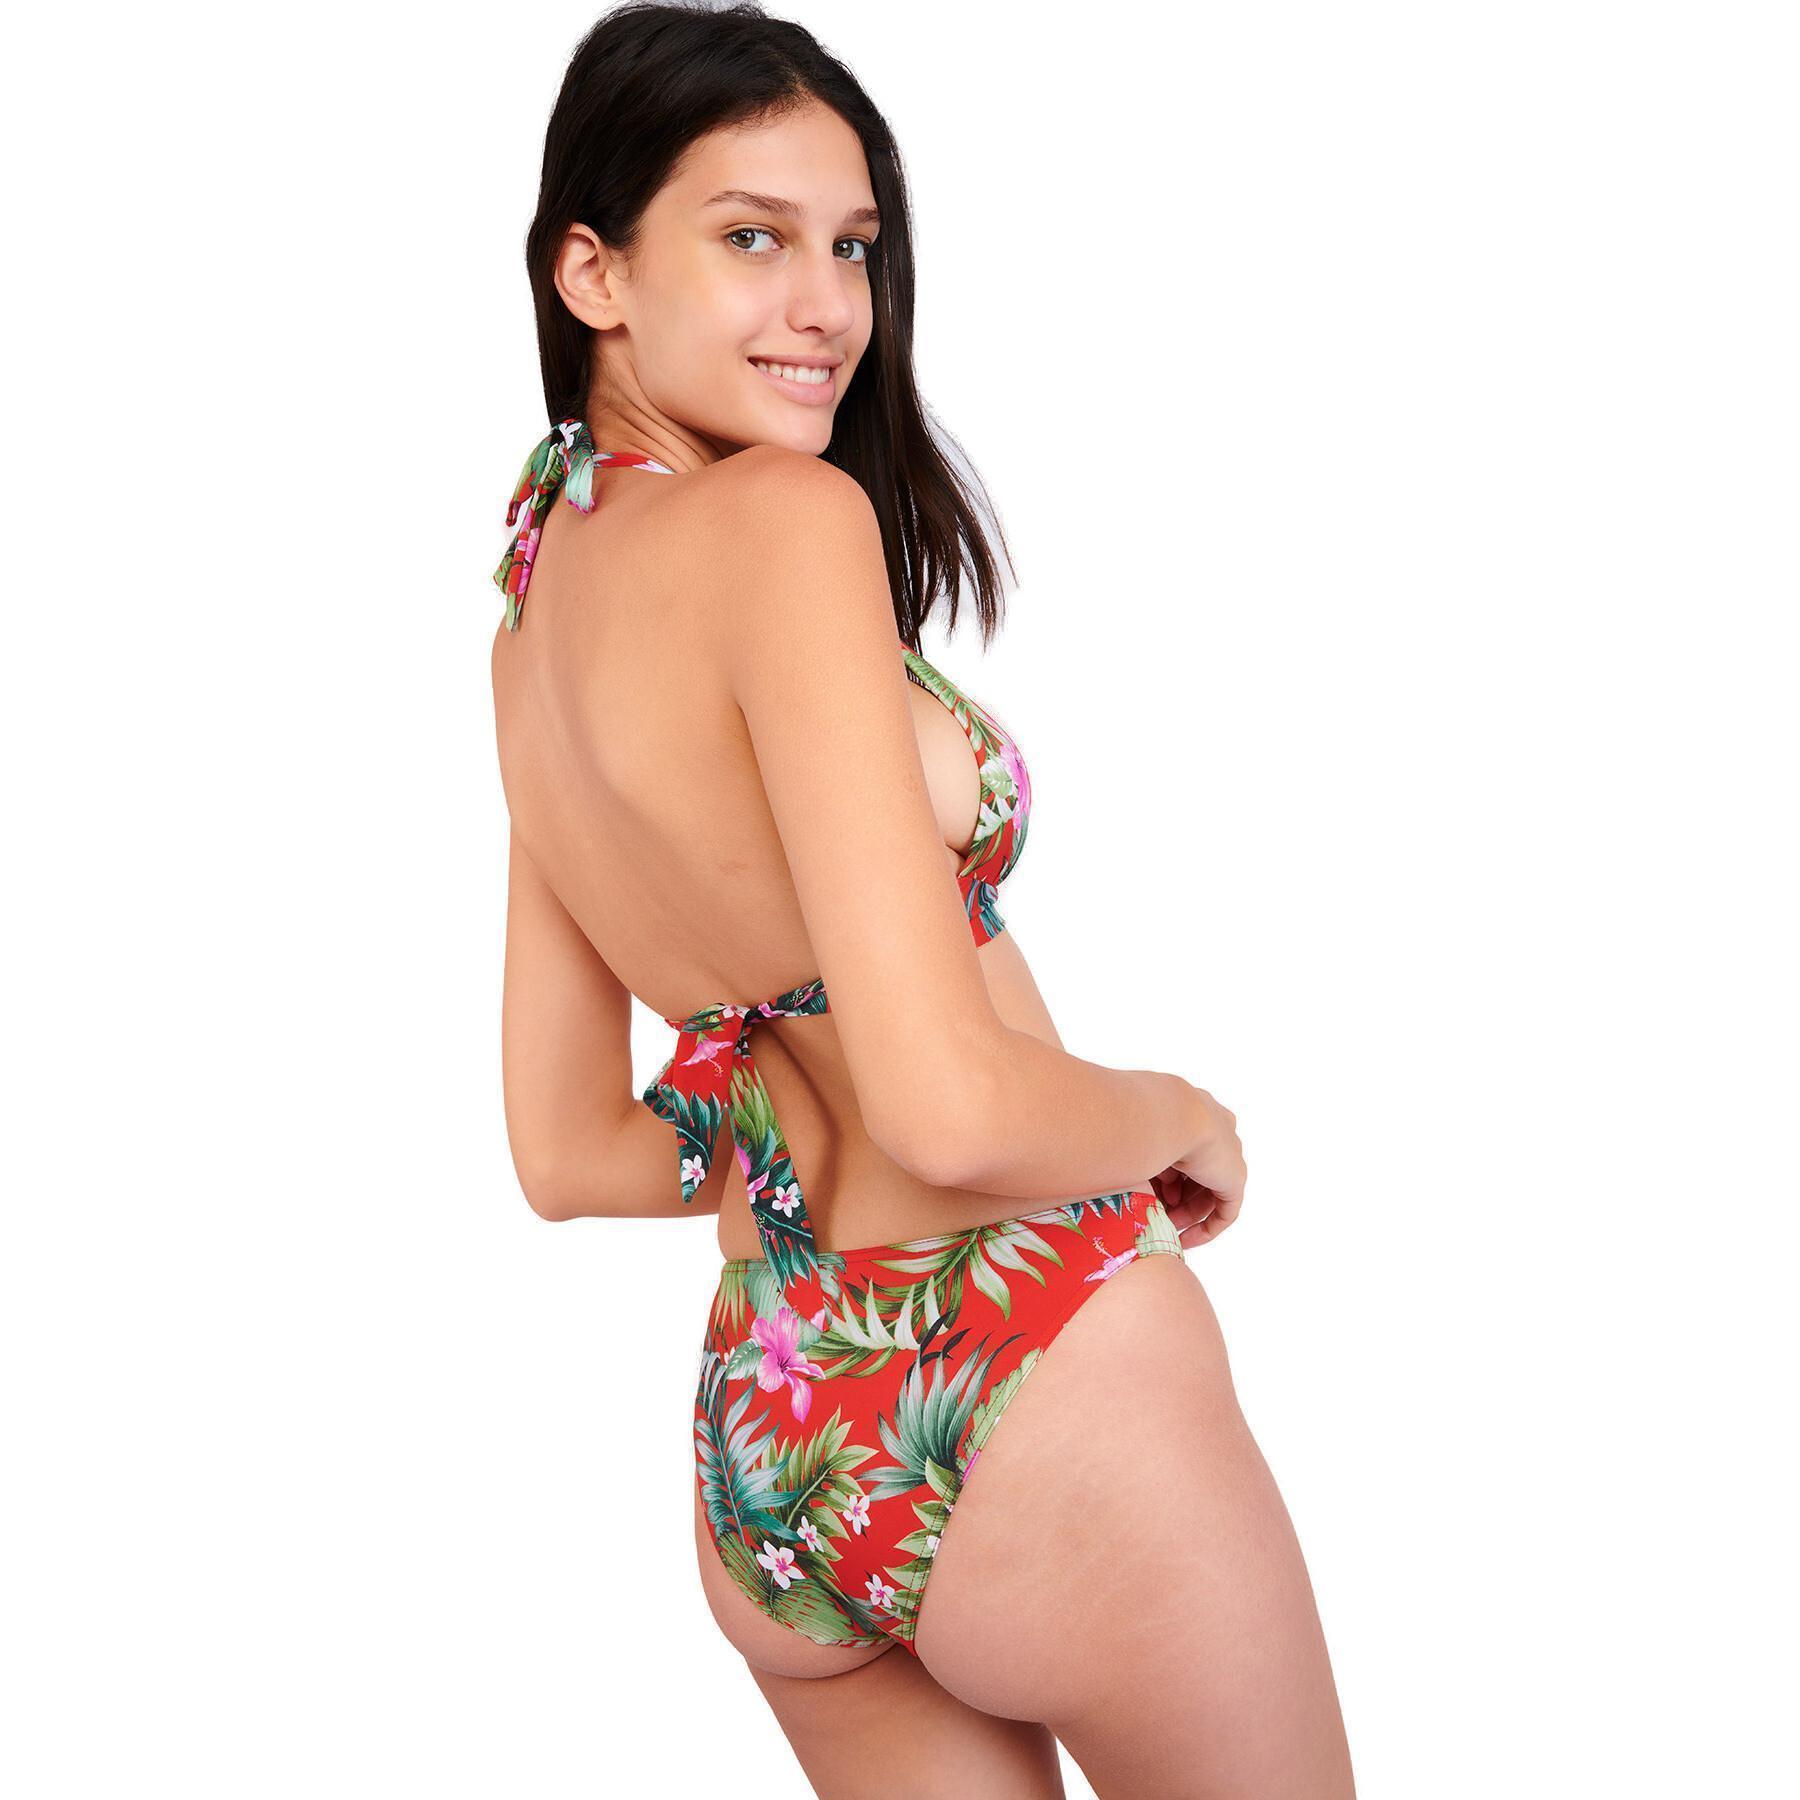 women's swim bikini top by Banana moon Maho Mahalo